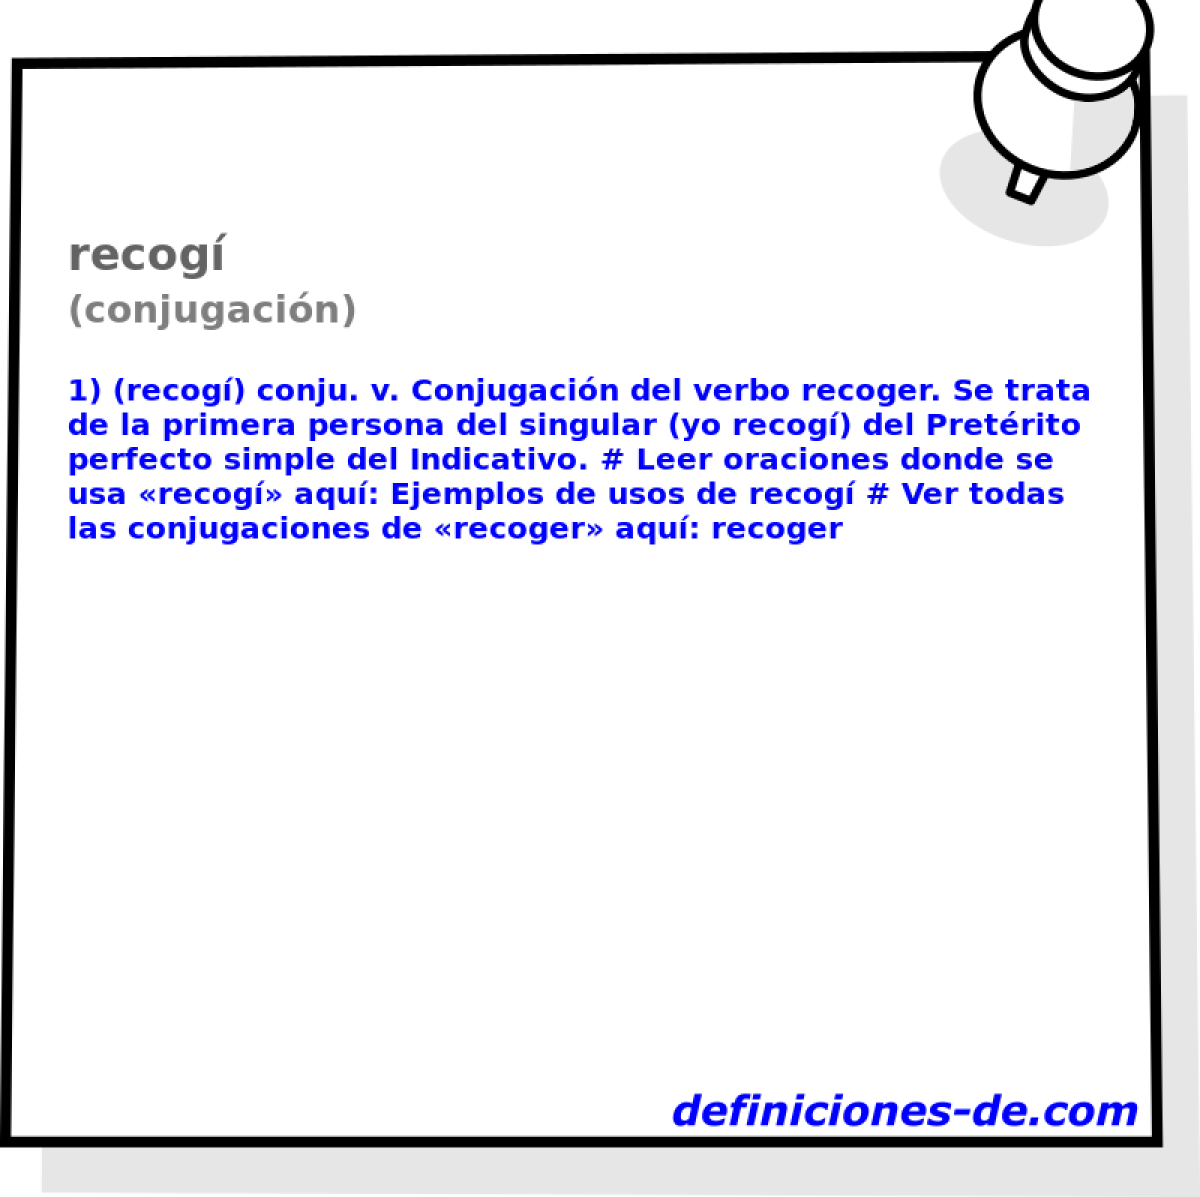 recog (conjugacin)